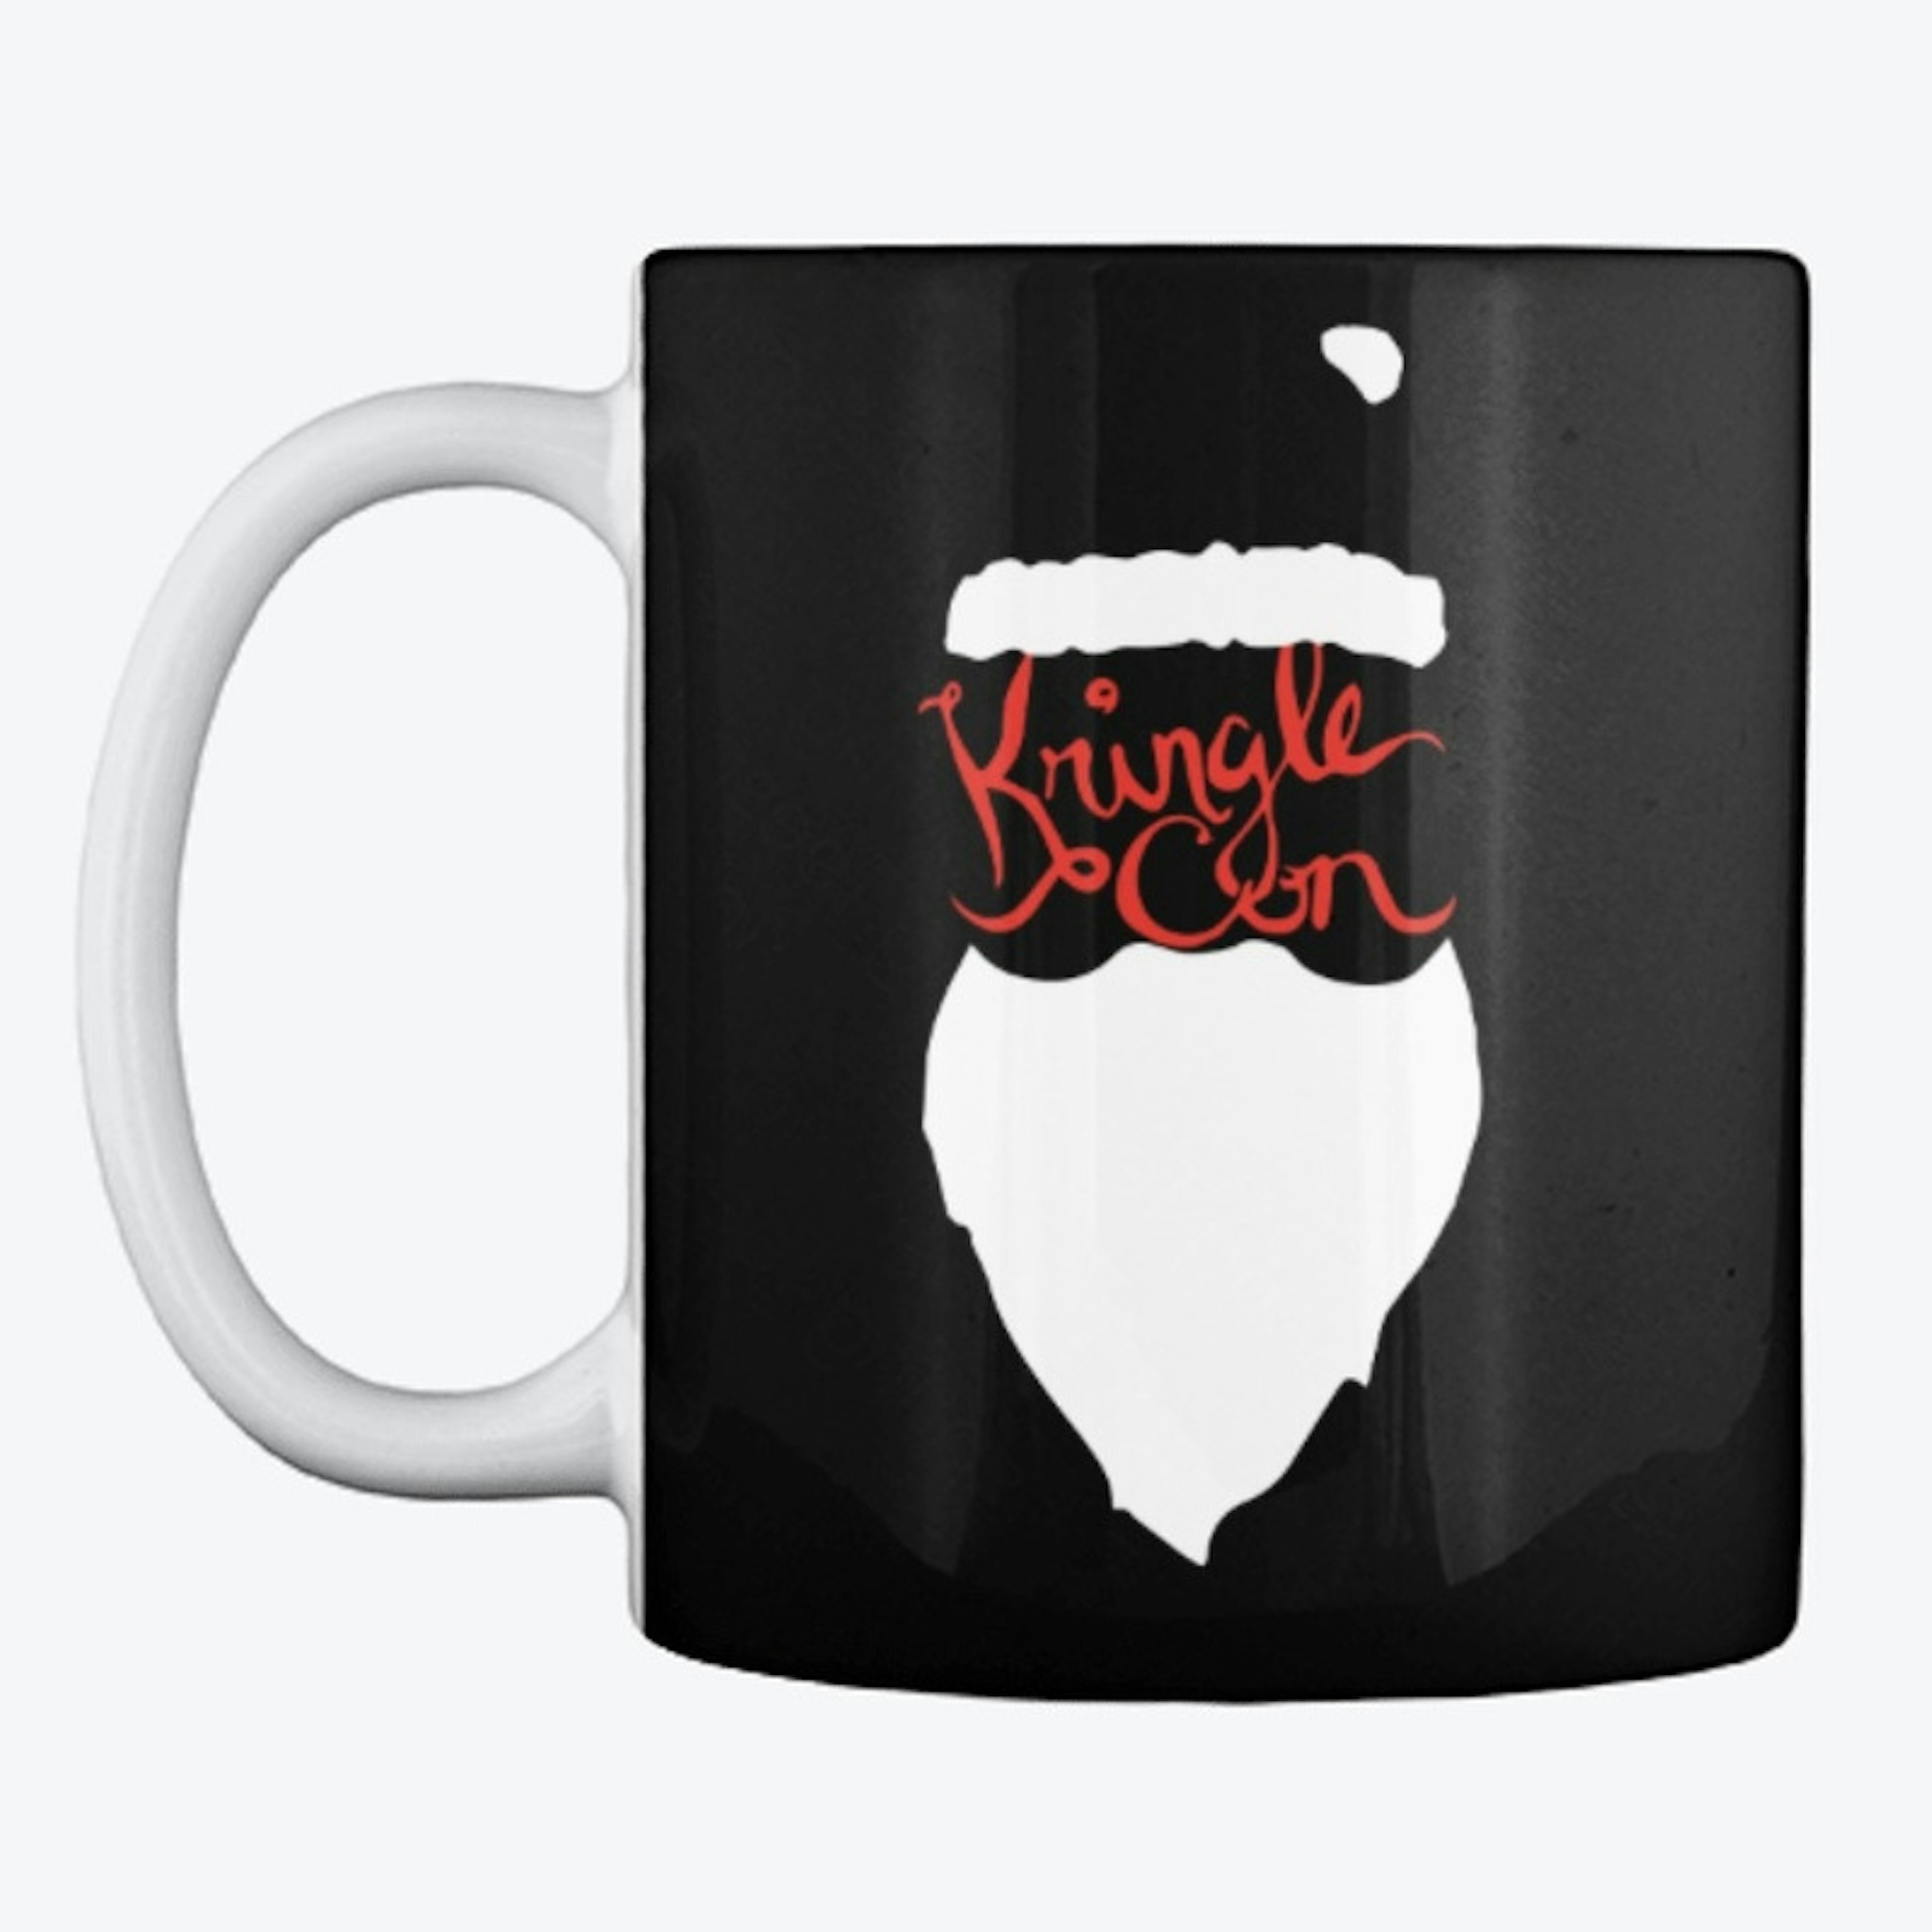 Kringle Con 3 Mug